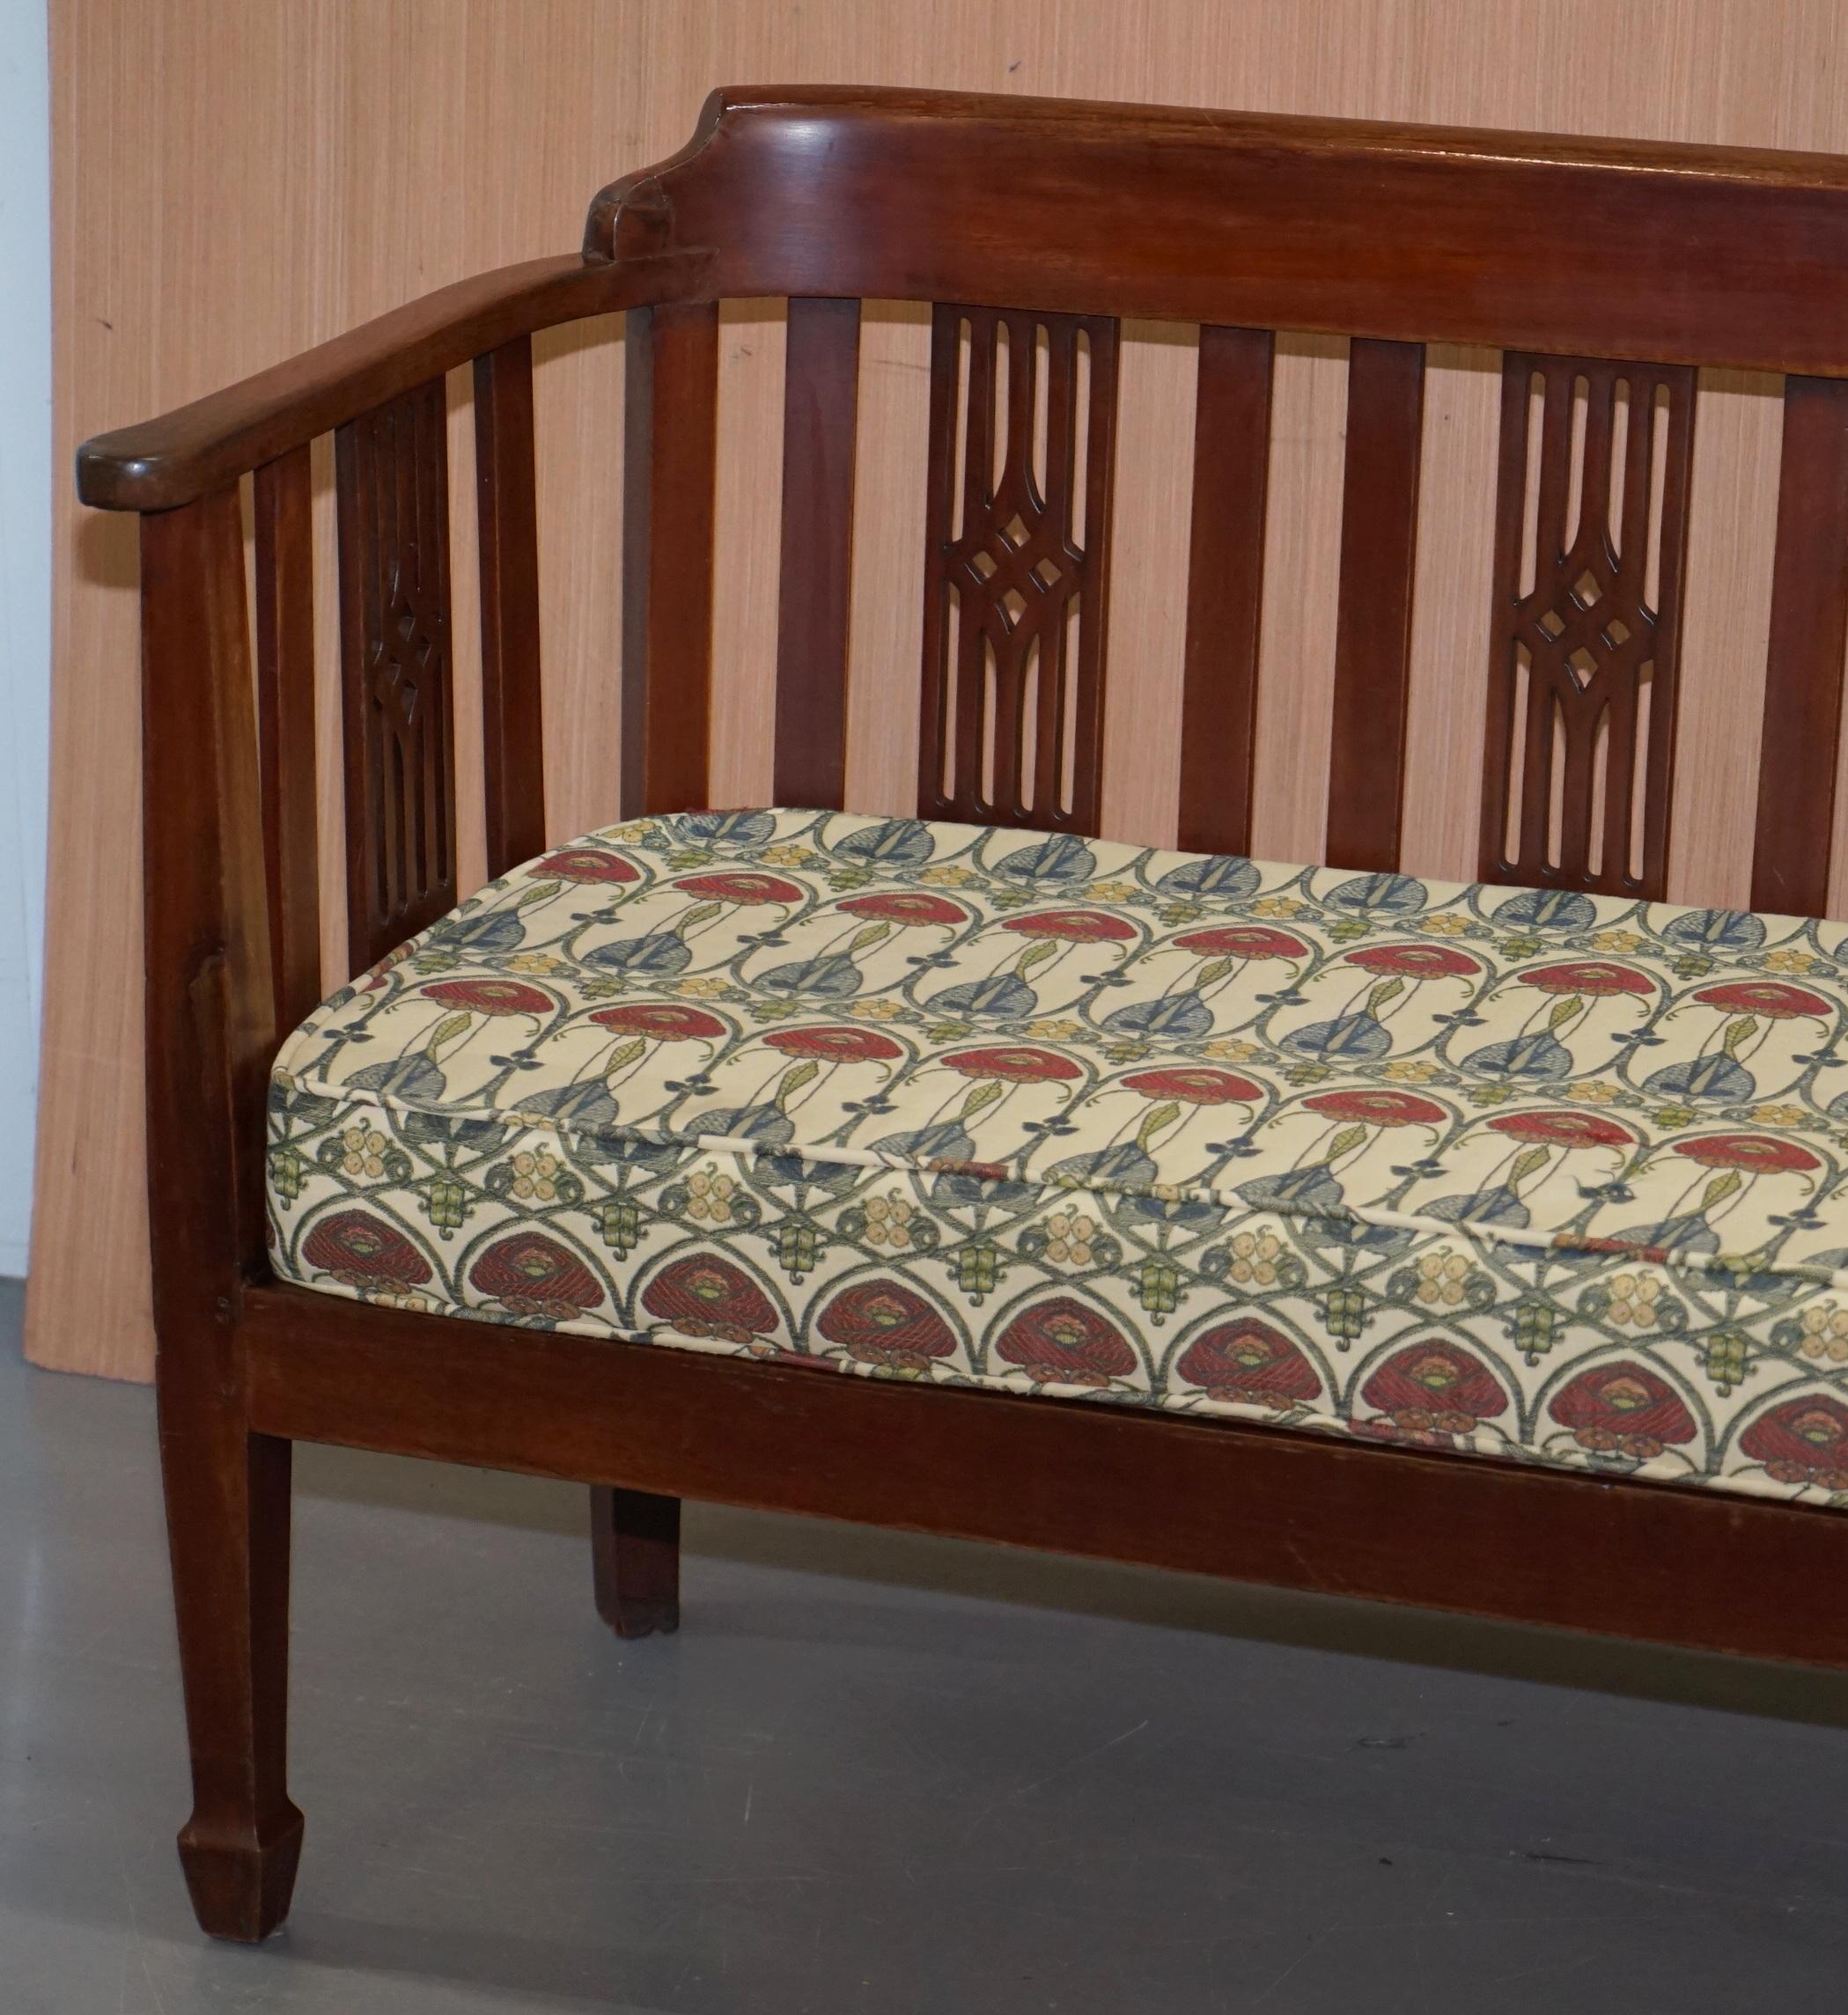 Modern Charles Rennie Mackintosh Art Nouveau upholstered 2 seat bench sofa berger seat